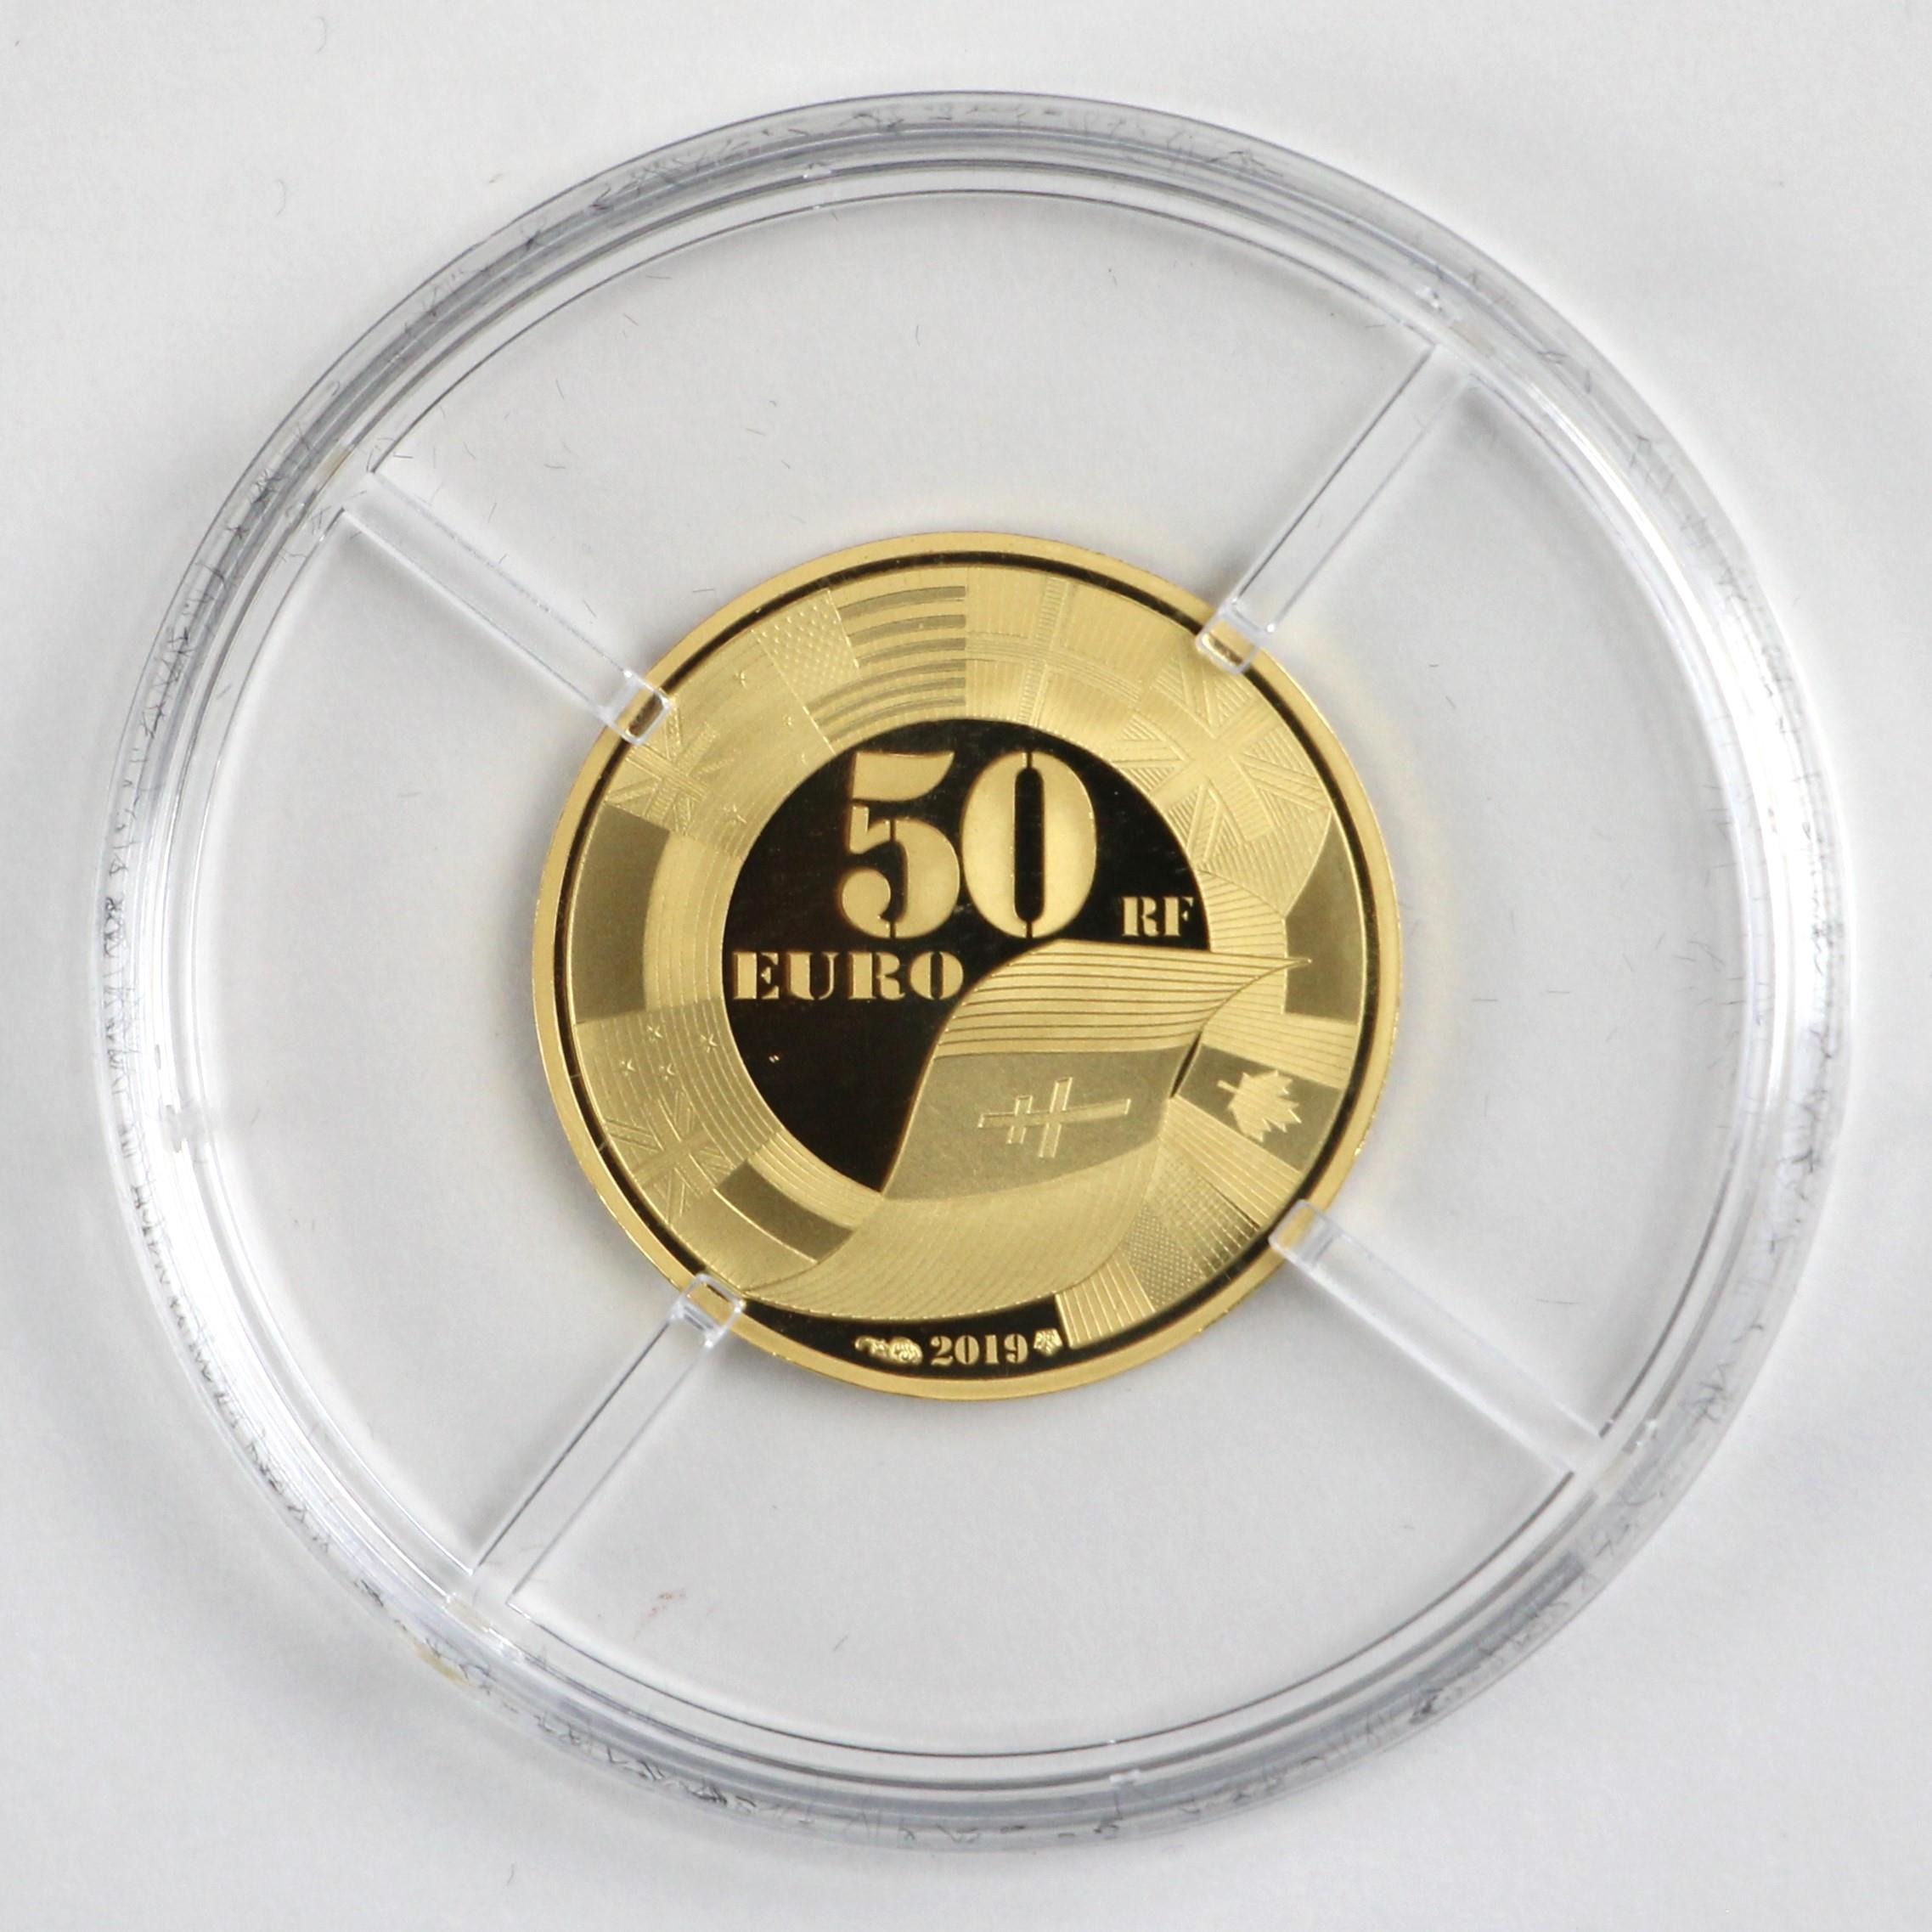 Monnaie De Paris, 1/4oz D-Day gold 50 Euro, 2019, proof, commemorating the 75th anniversary, - Image 2 of 3